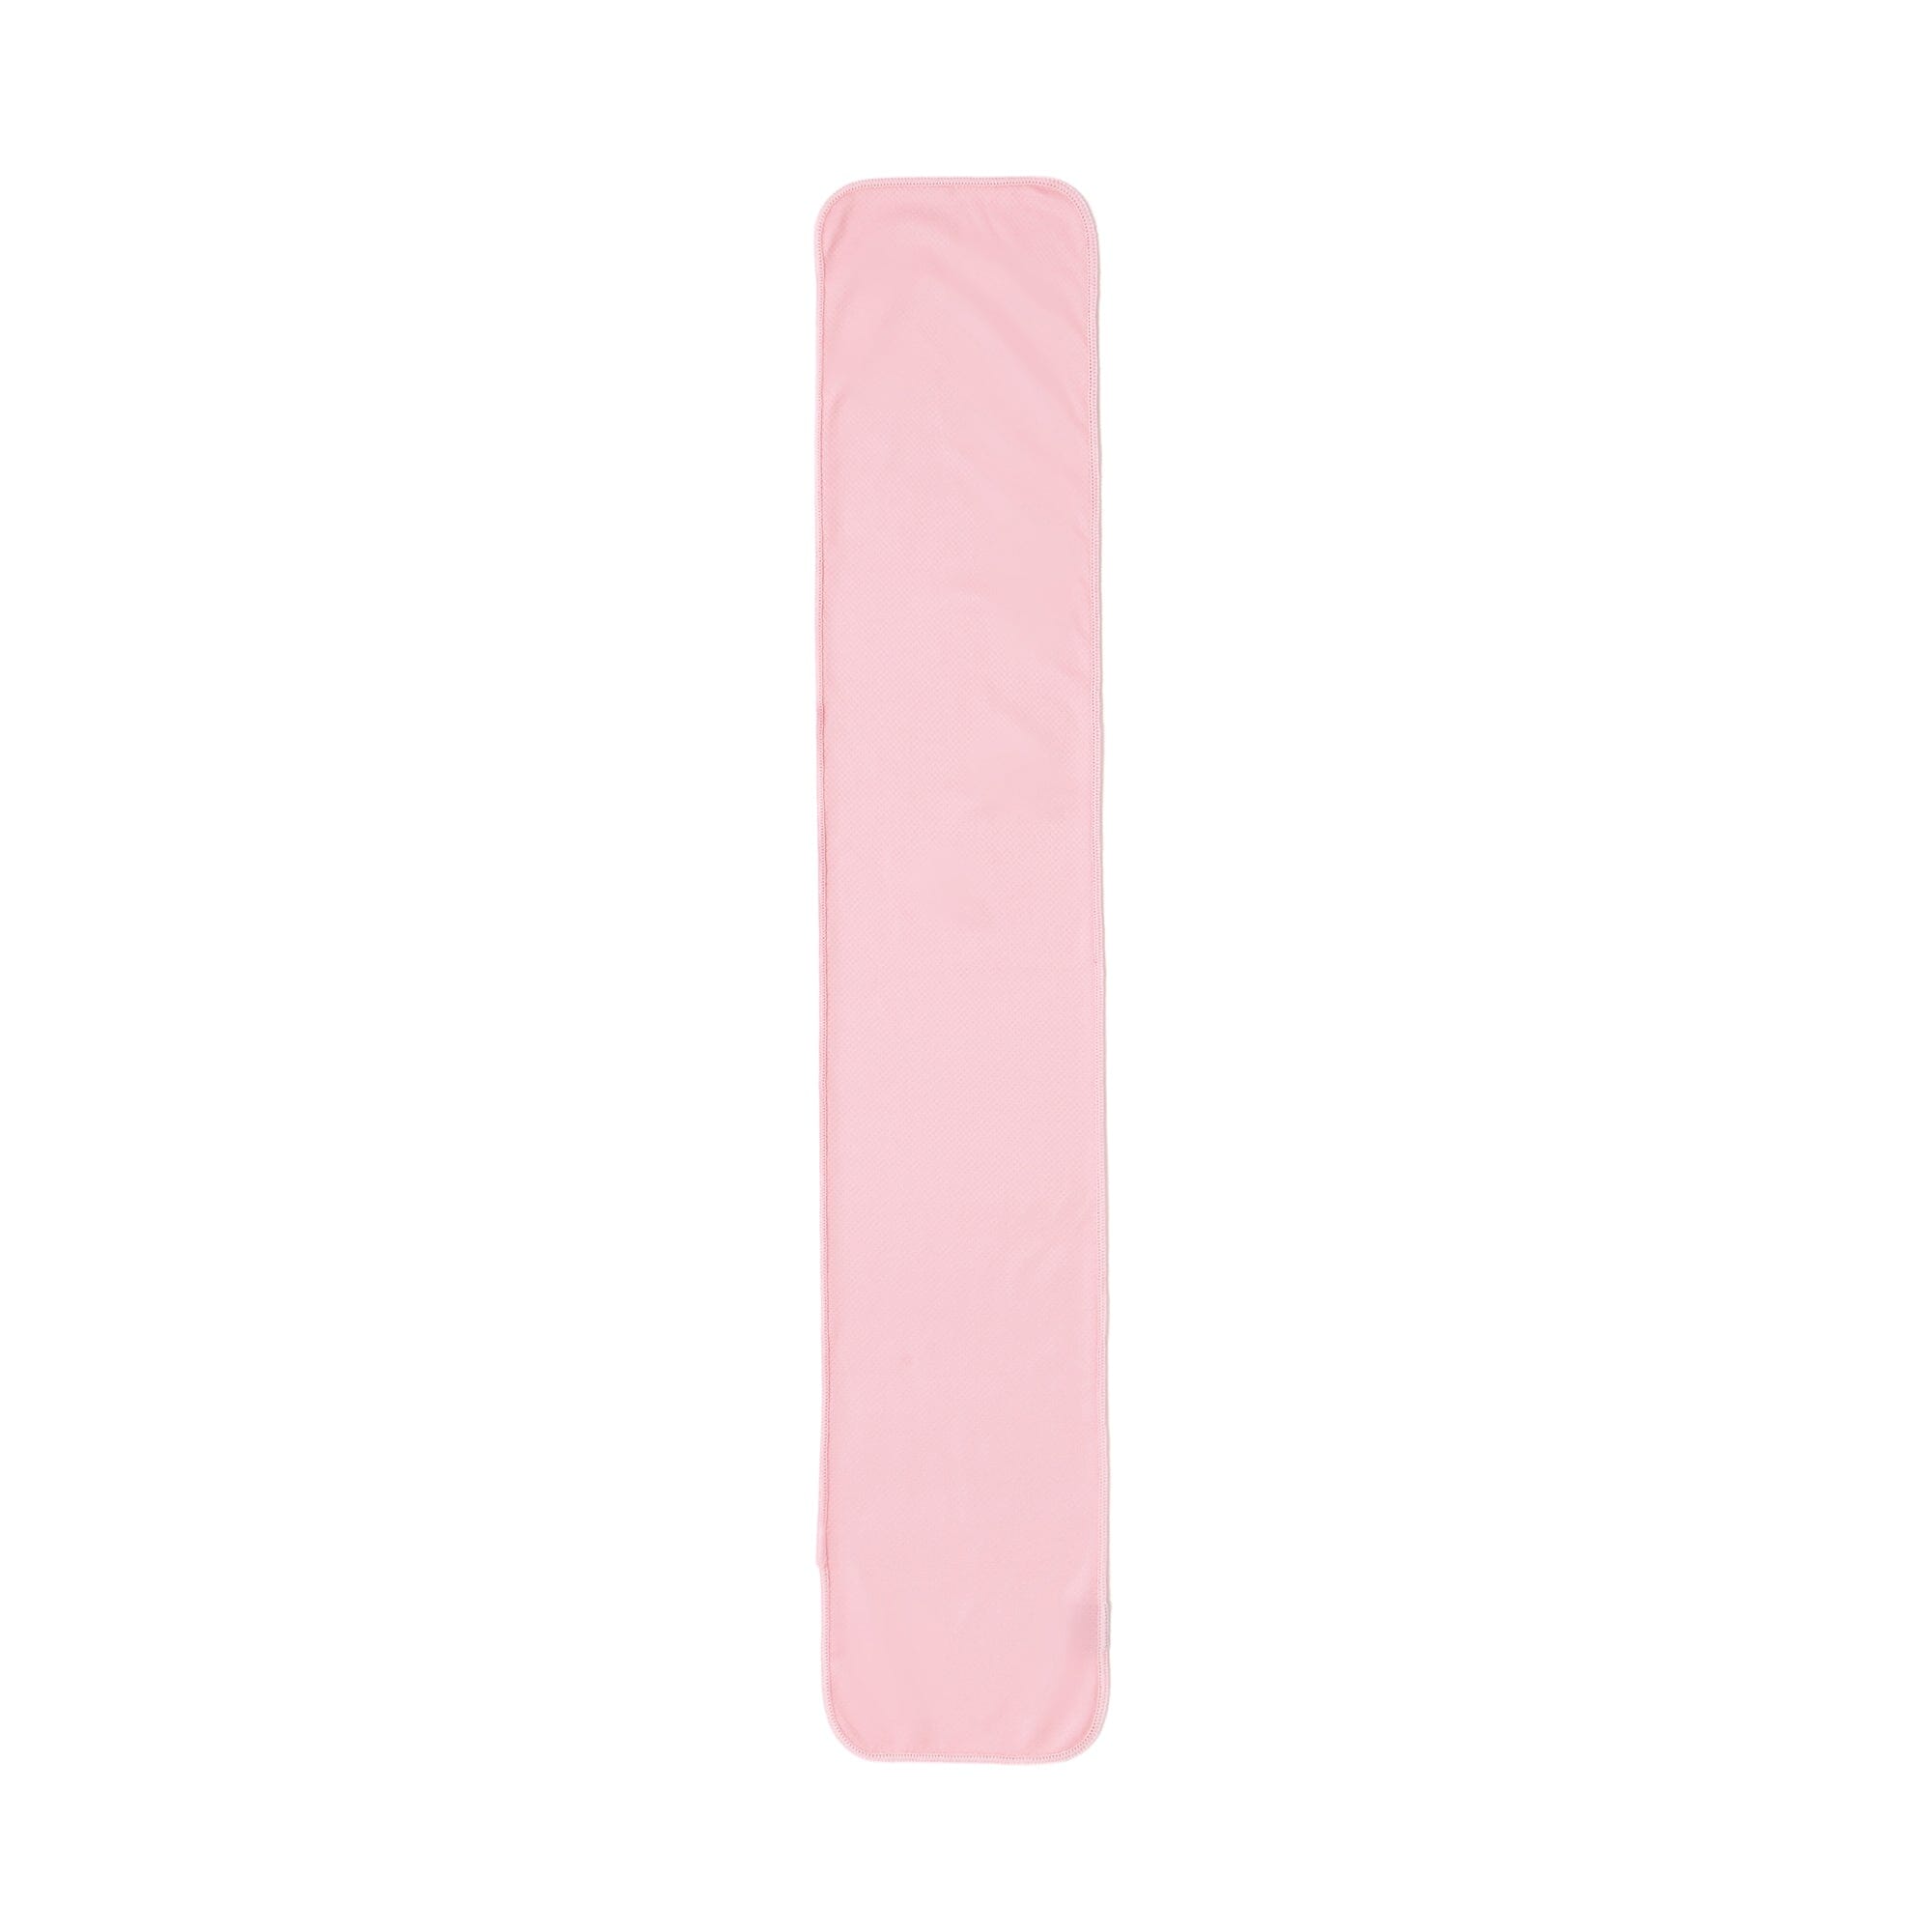 UV Cool Towel S Pink